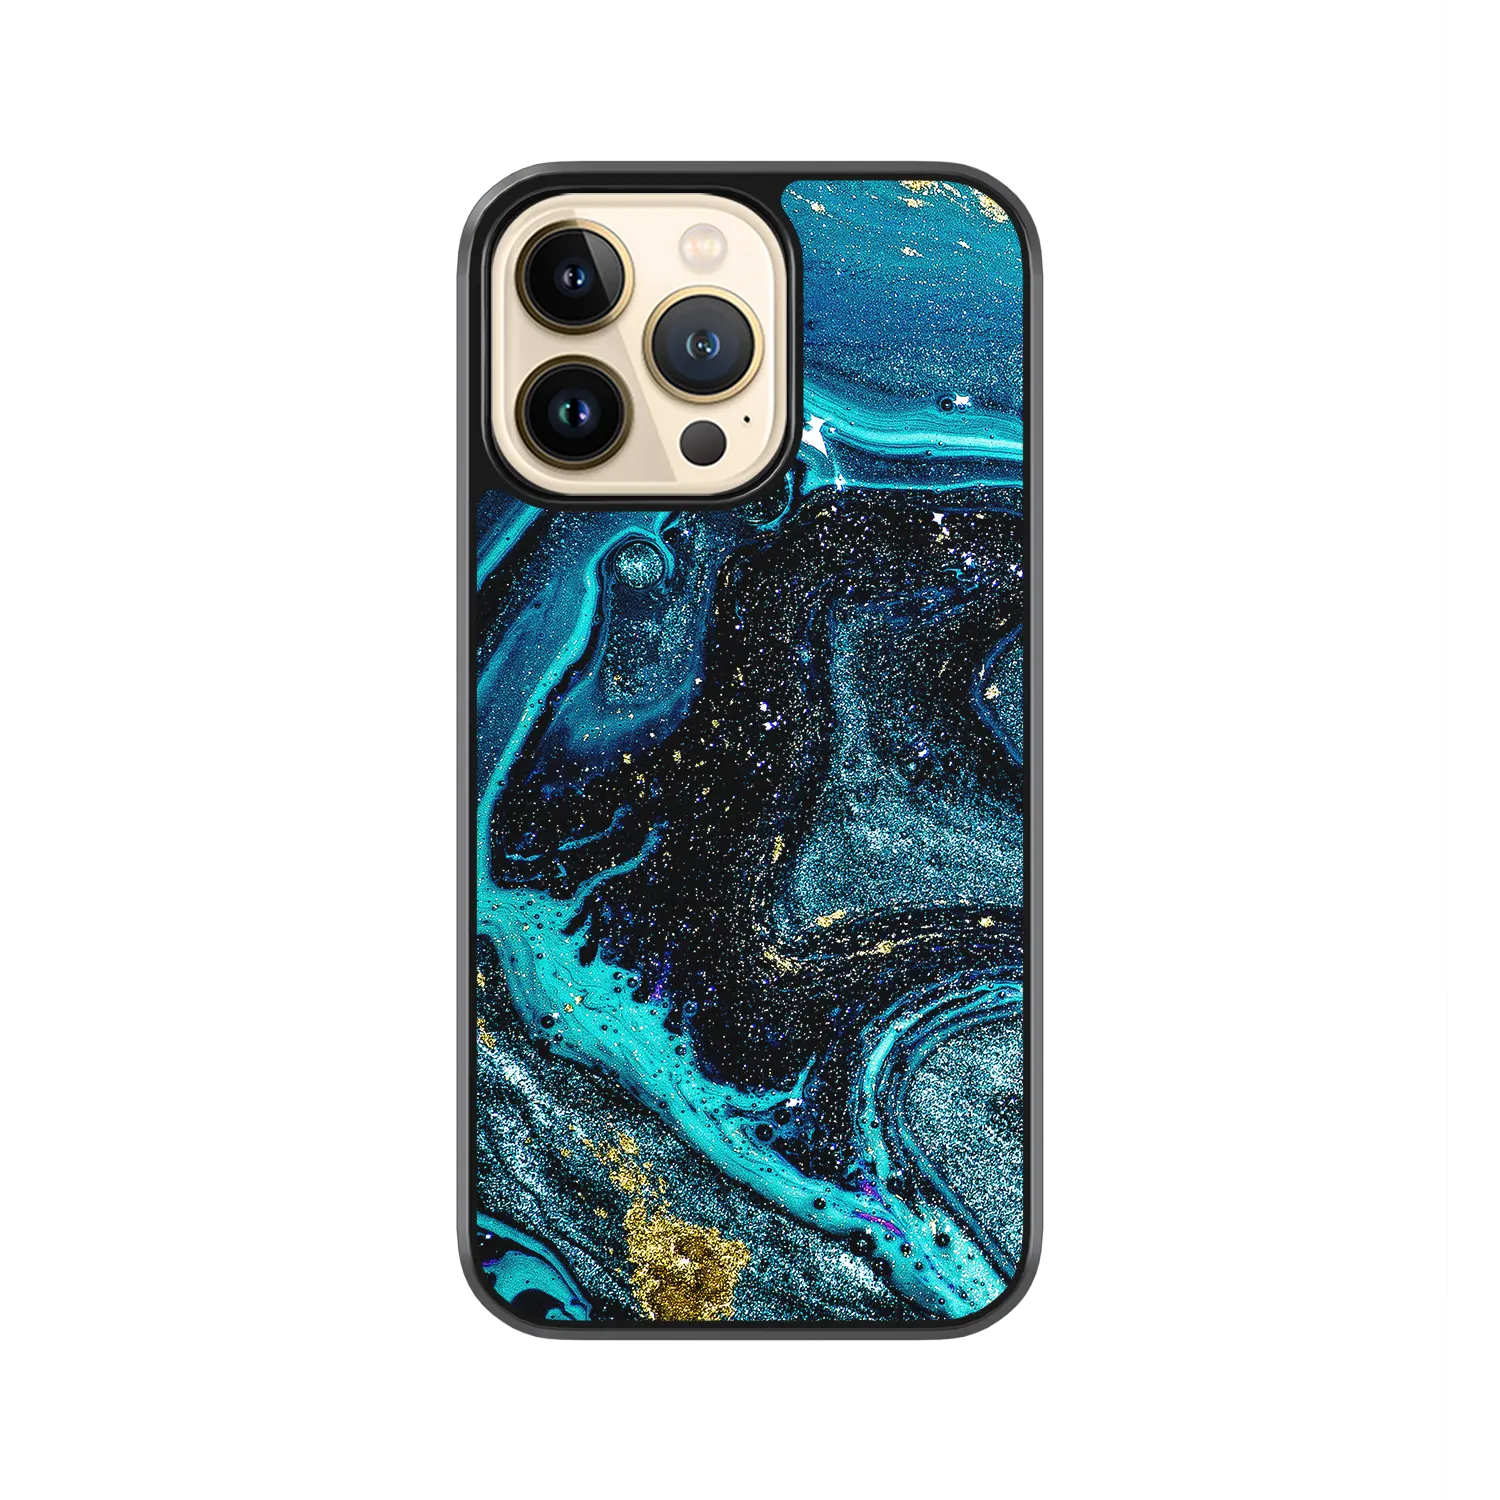 Poseidon iphone 12 pro cover